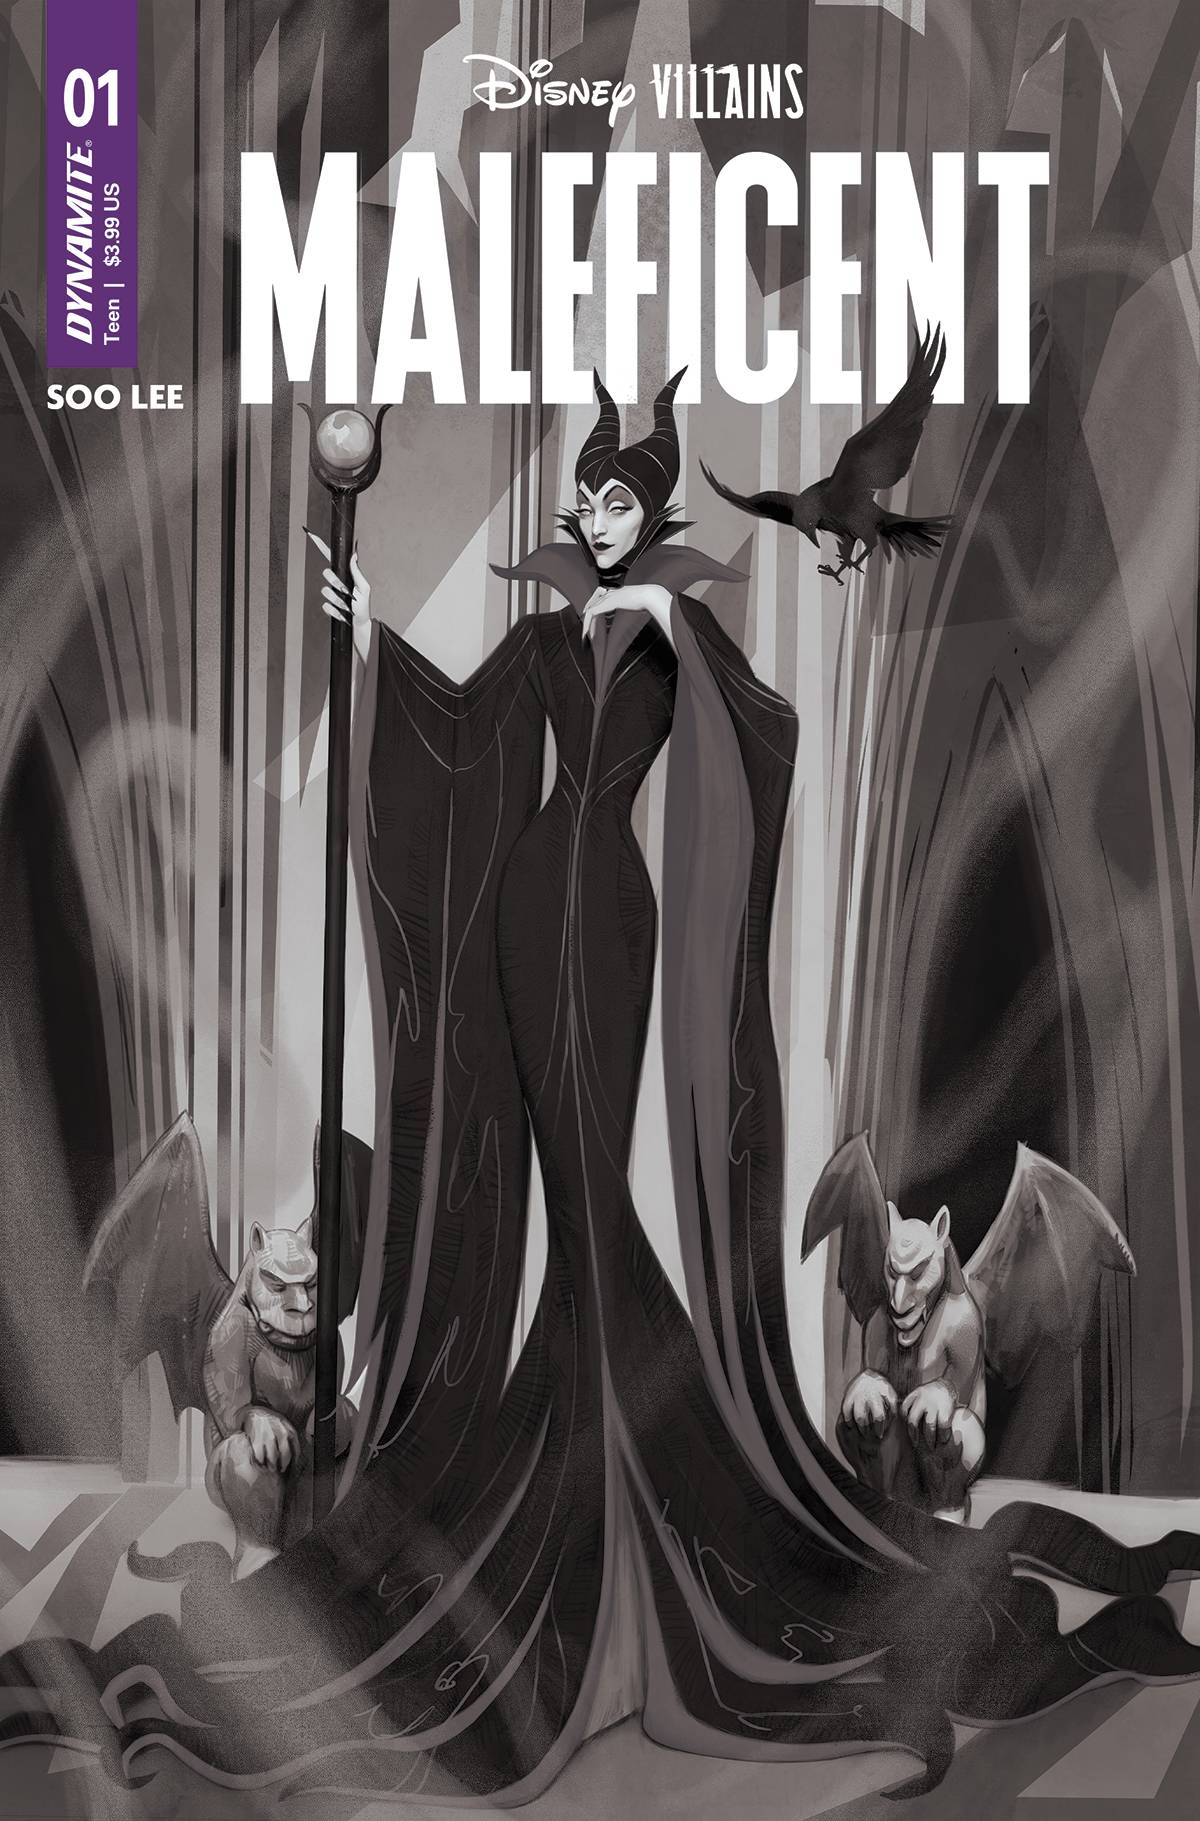 Disney Villains Maleficent #1 Cover Zc 10 Copy Last Call Incentive Puebla